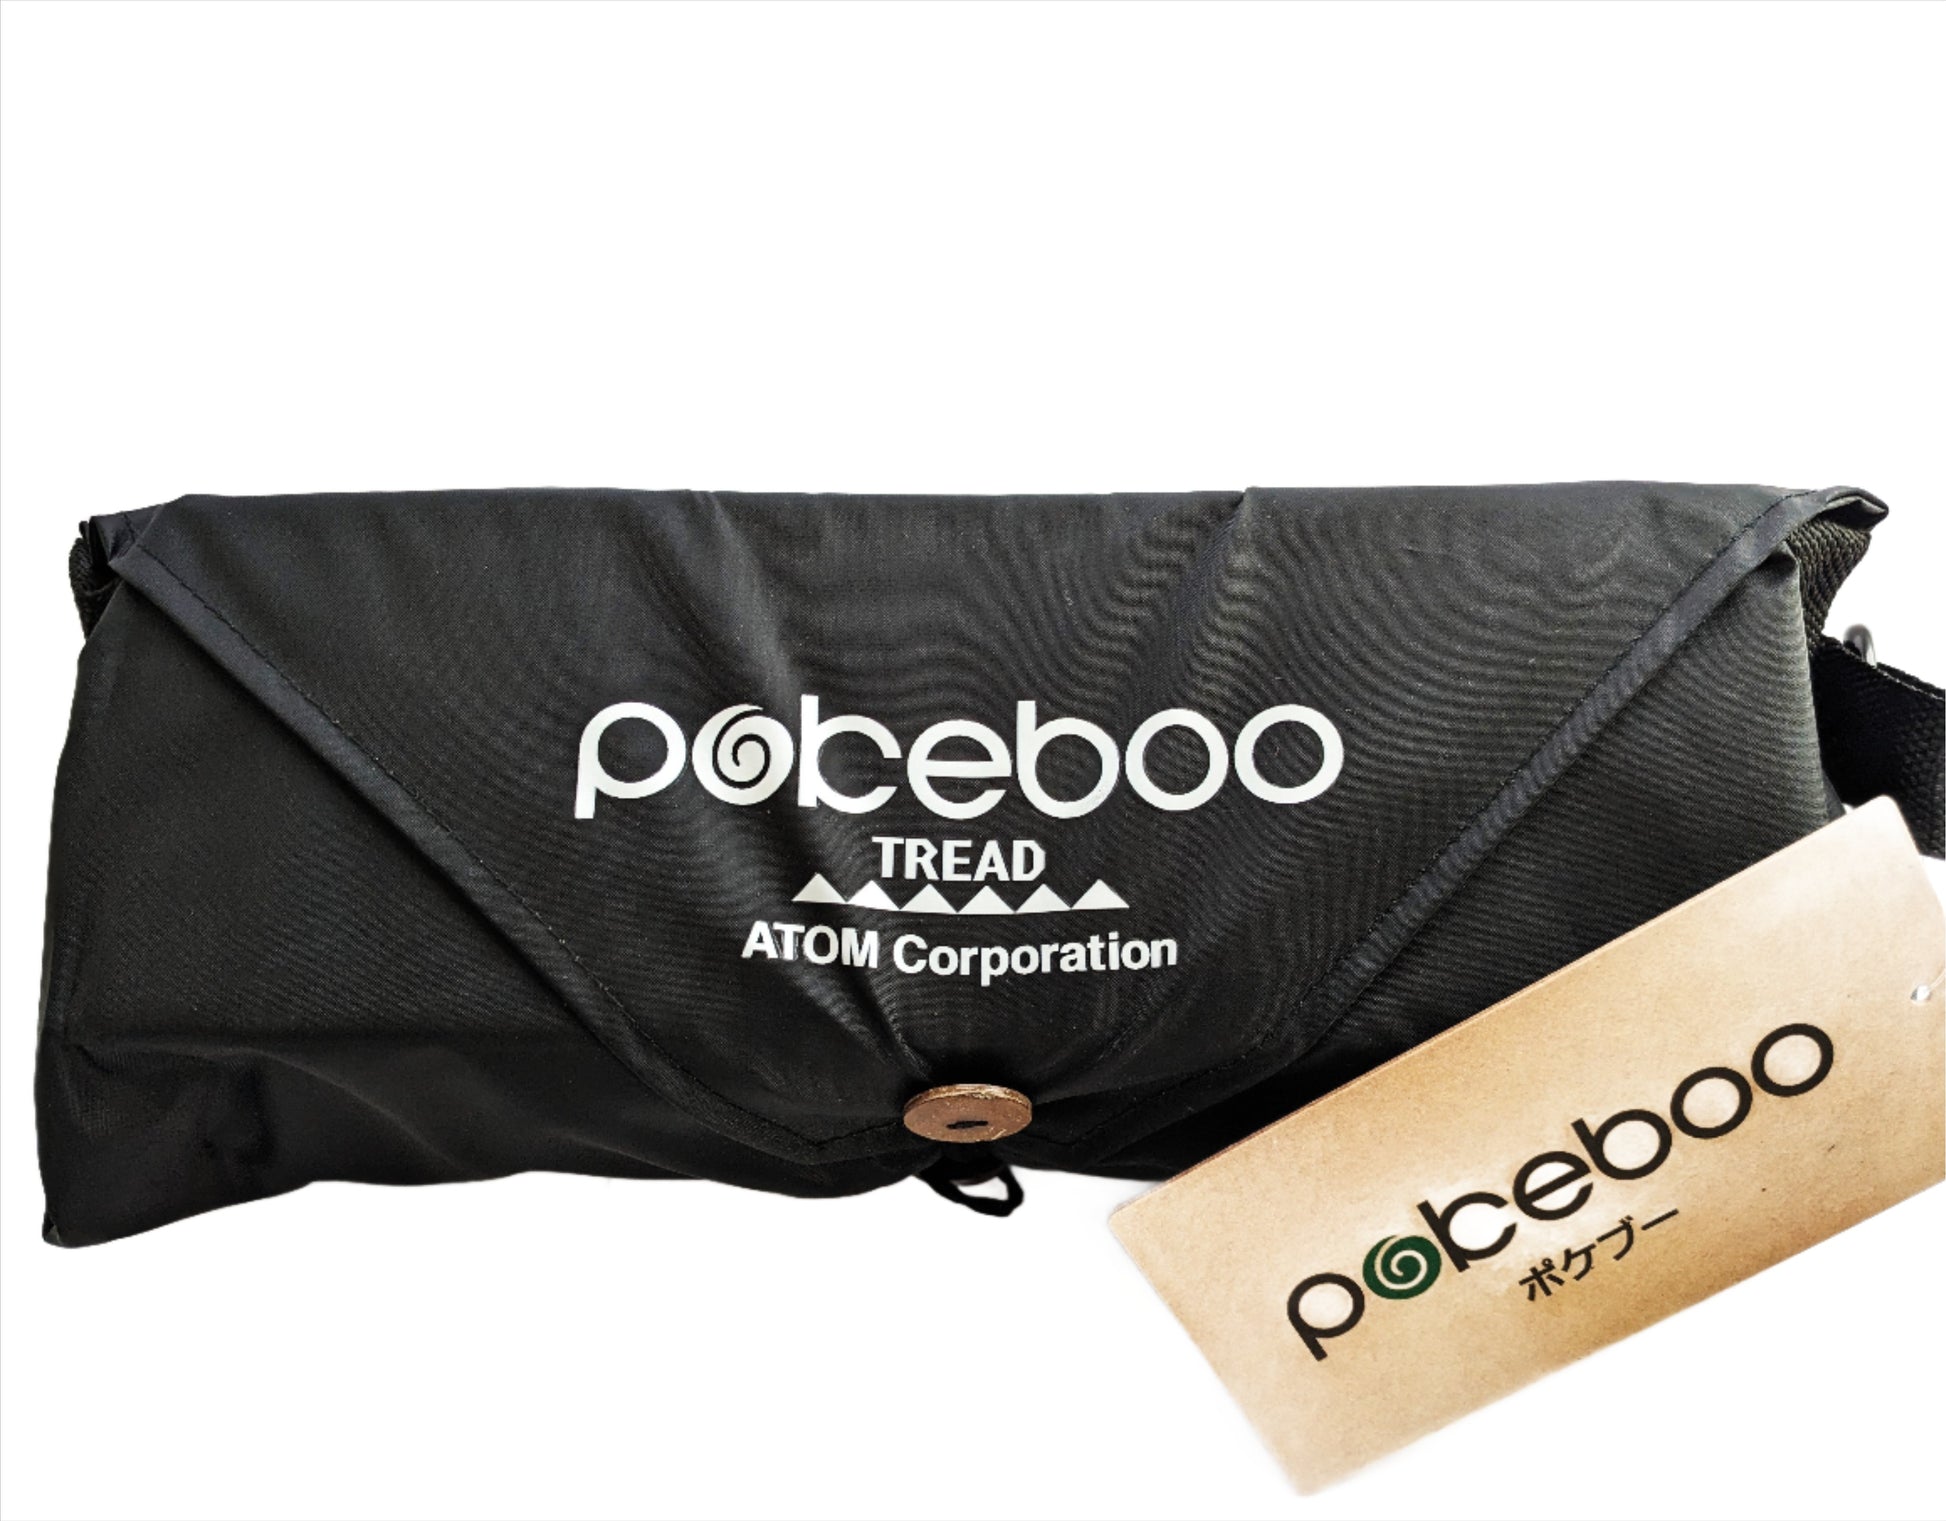 Pokeboo TREAD Carry Bag